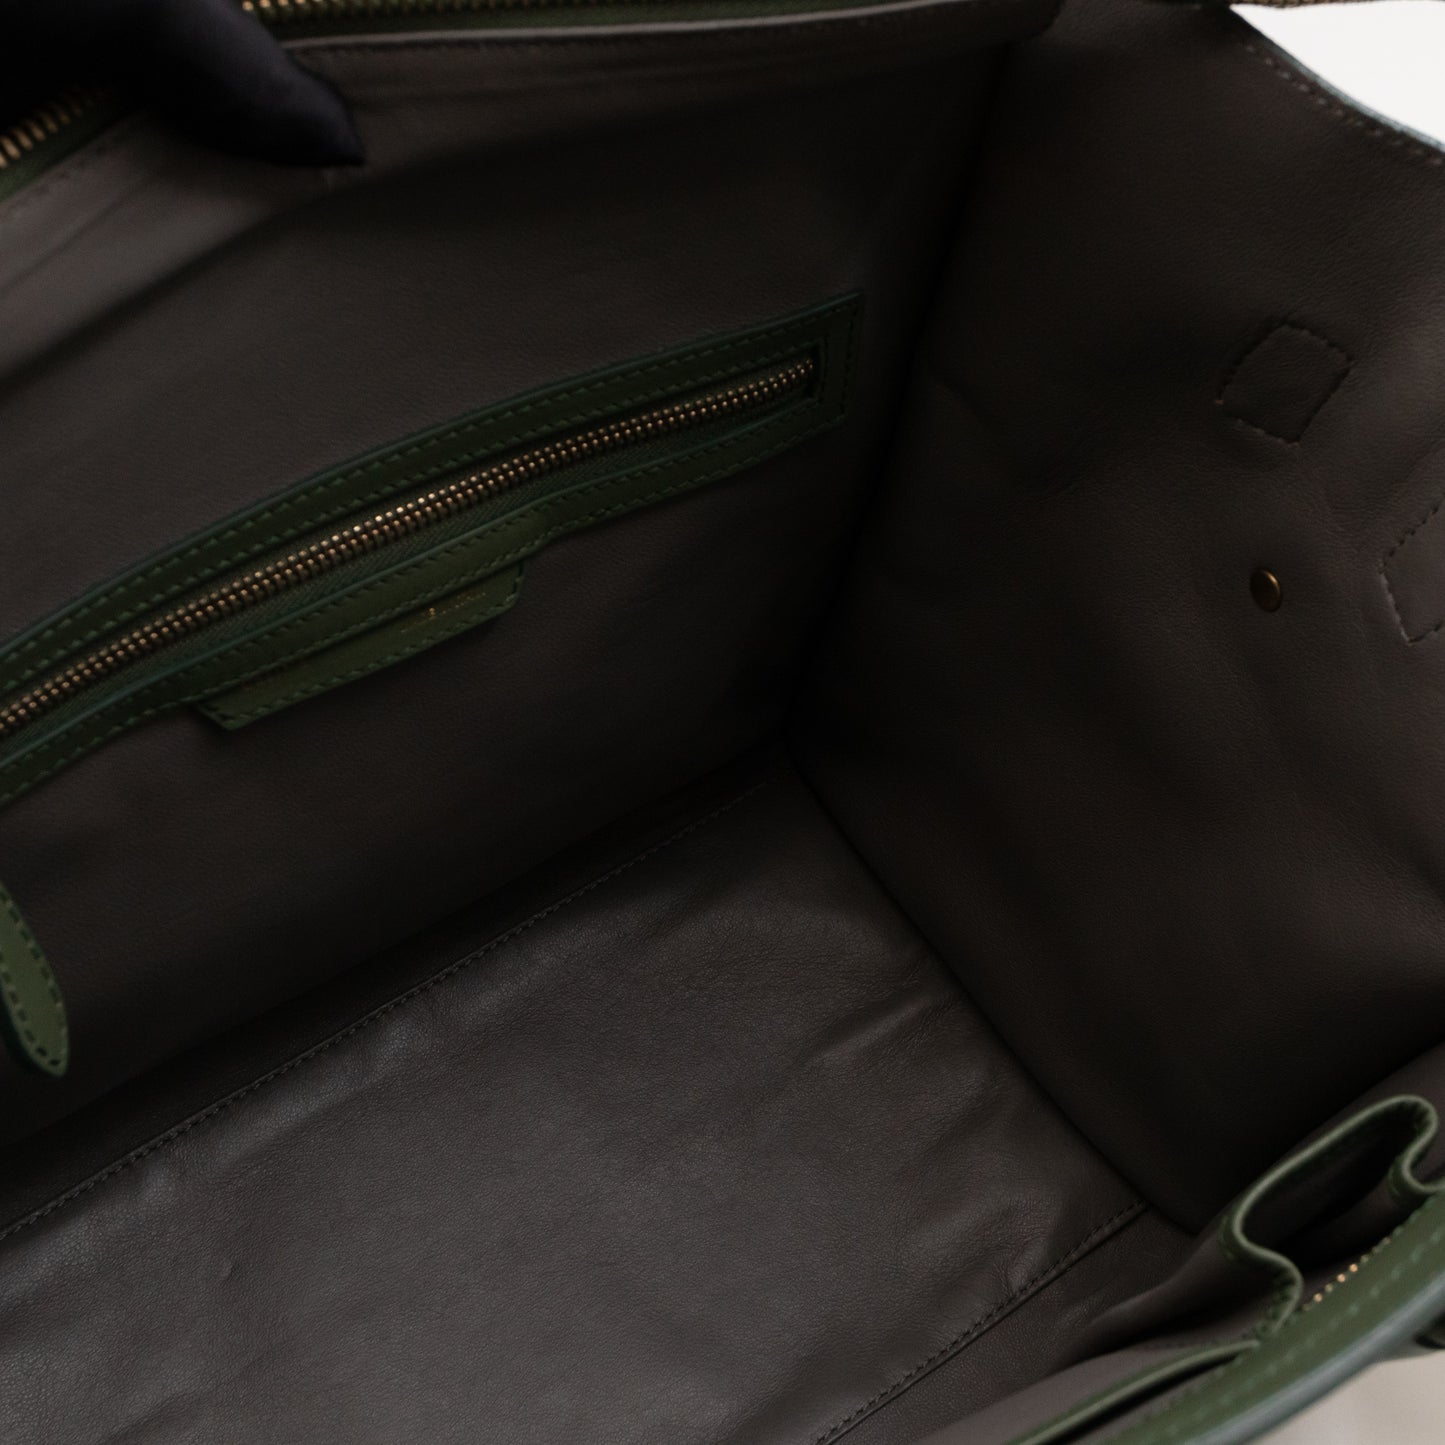 Mini Luggage Green Suede Leather